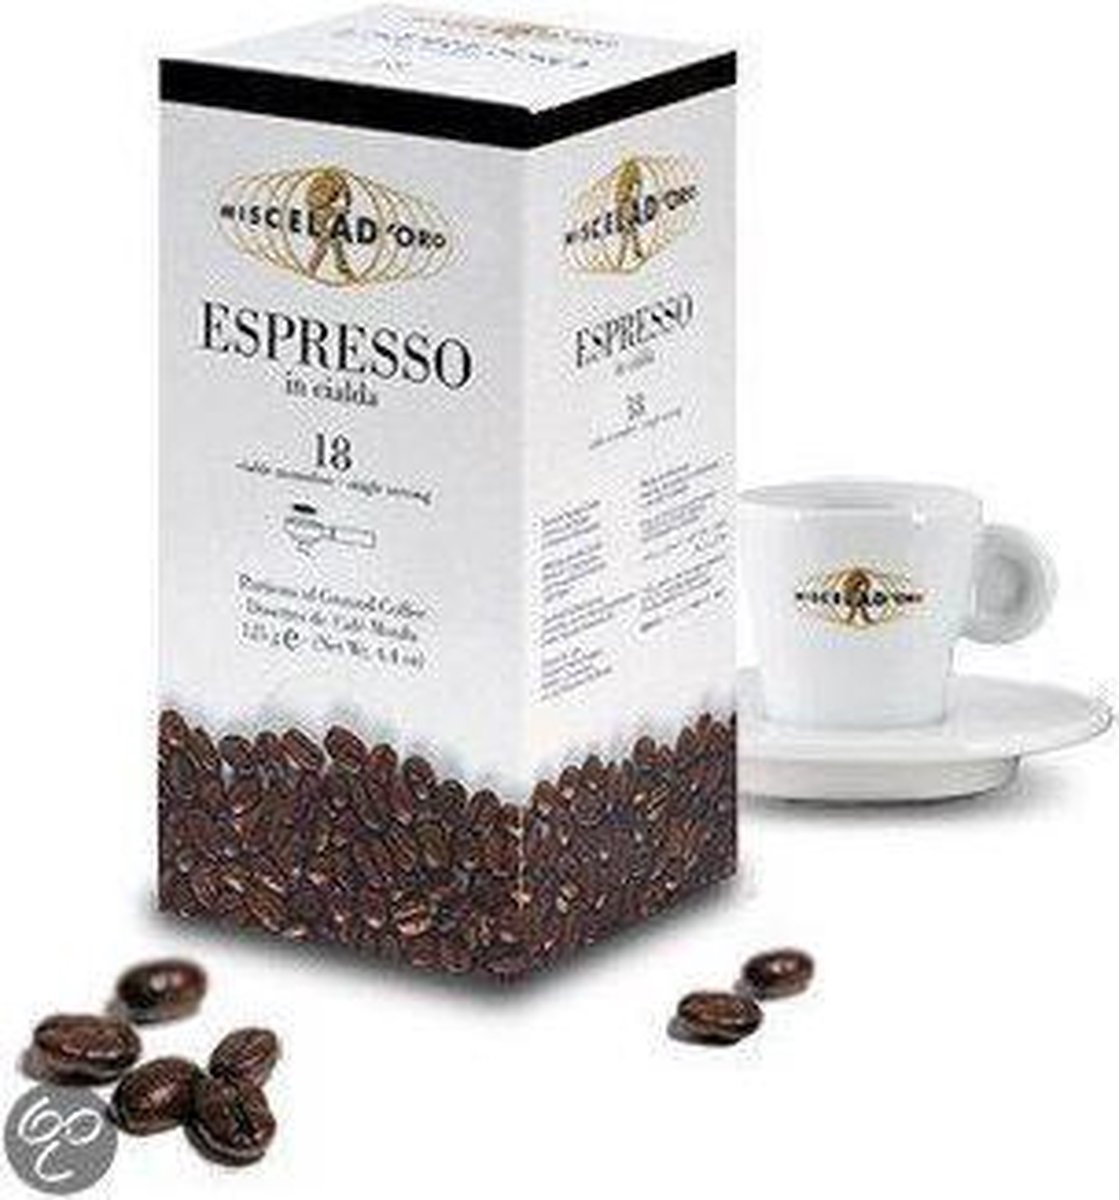 Miscela d'Oro Espresso ESE Pods 4 x 18 stuks